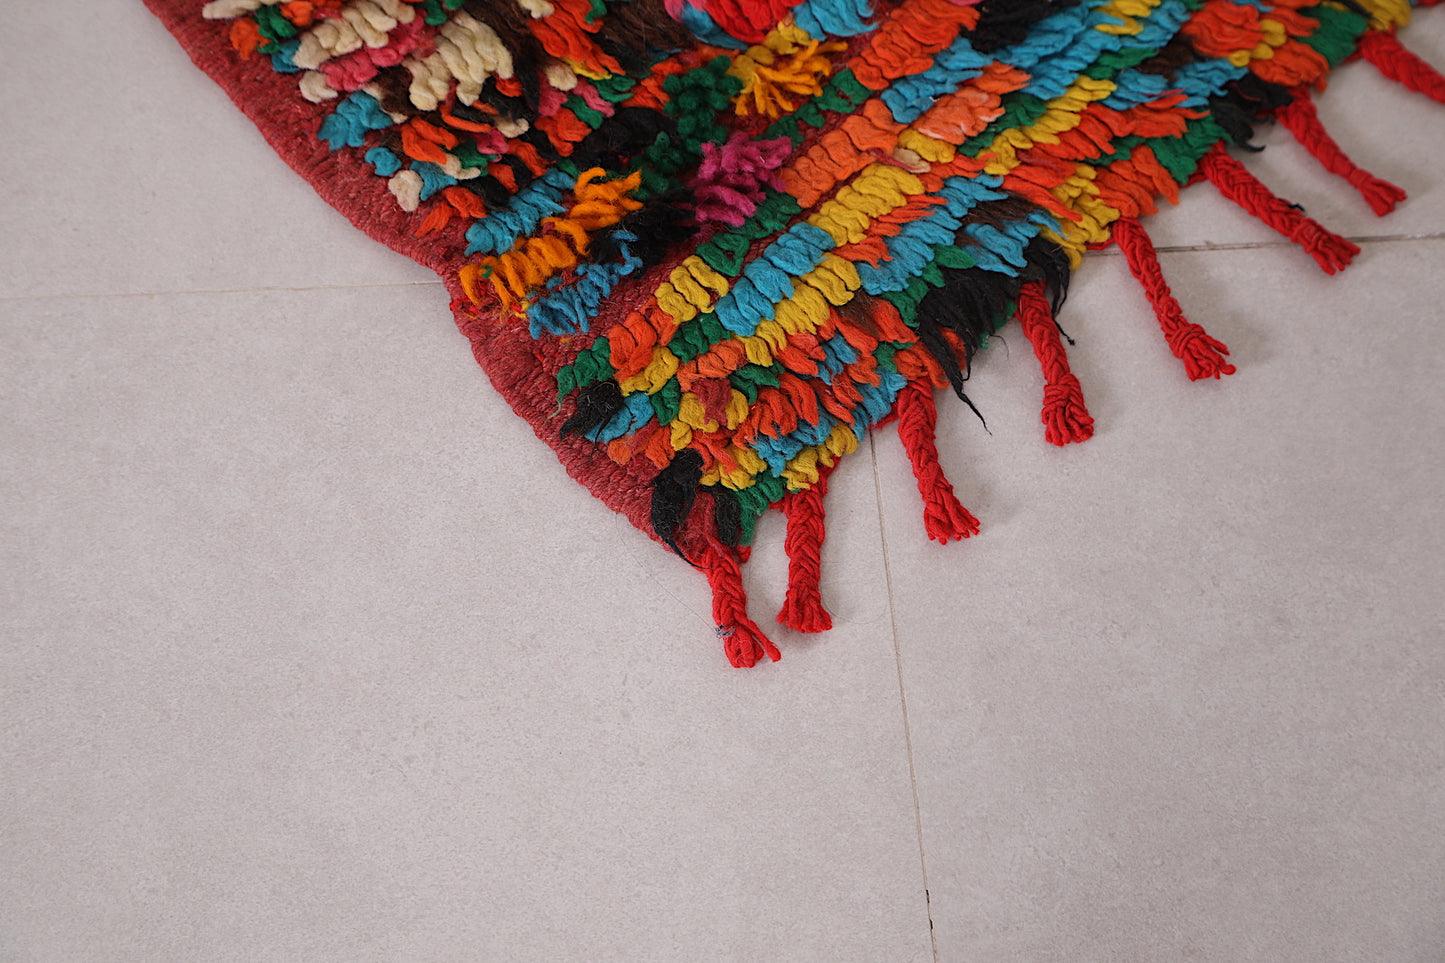 Red Tribal Berber Rug 3.4 x 8.9 Feet